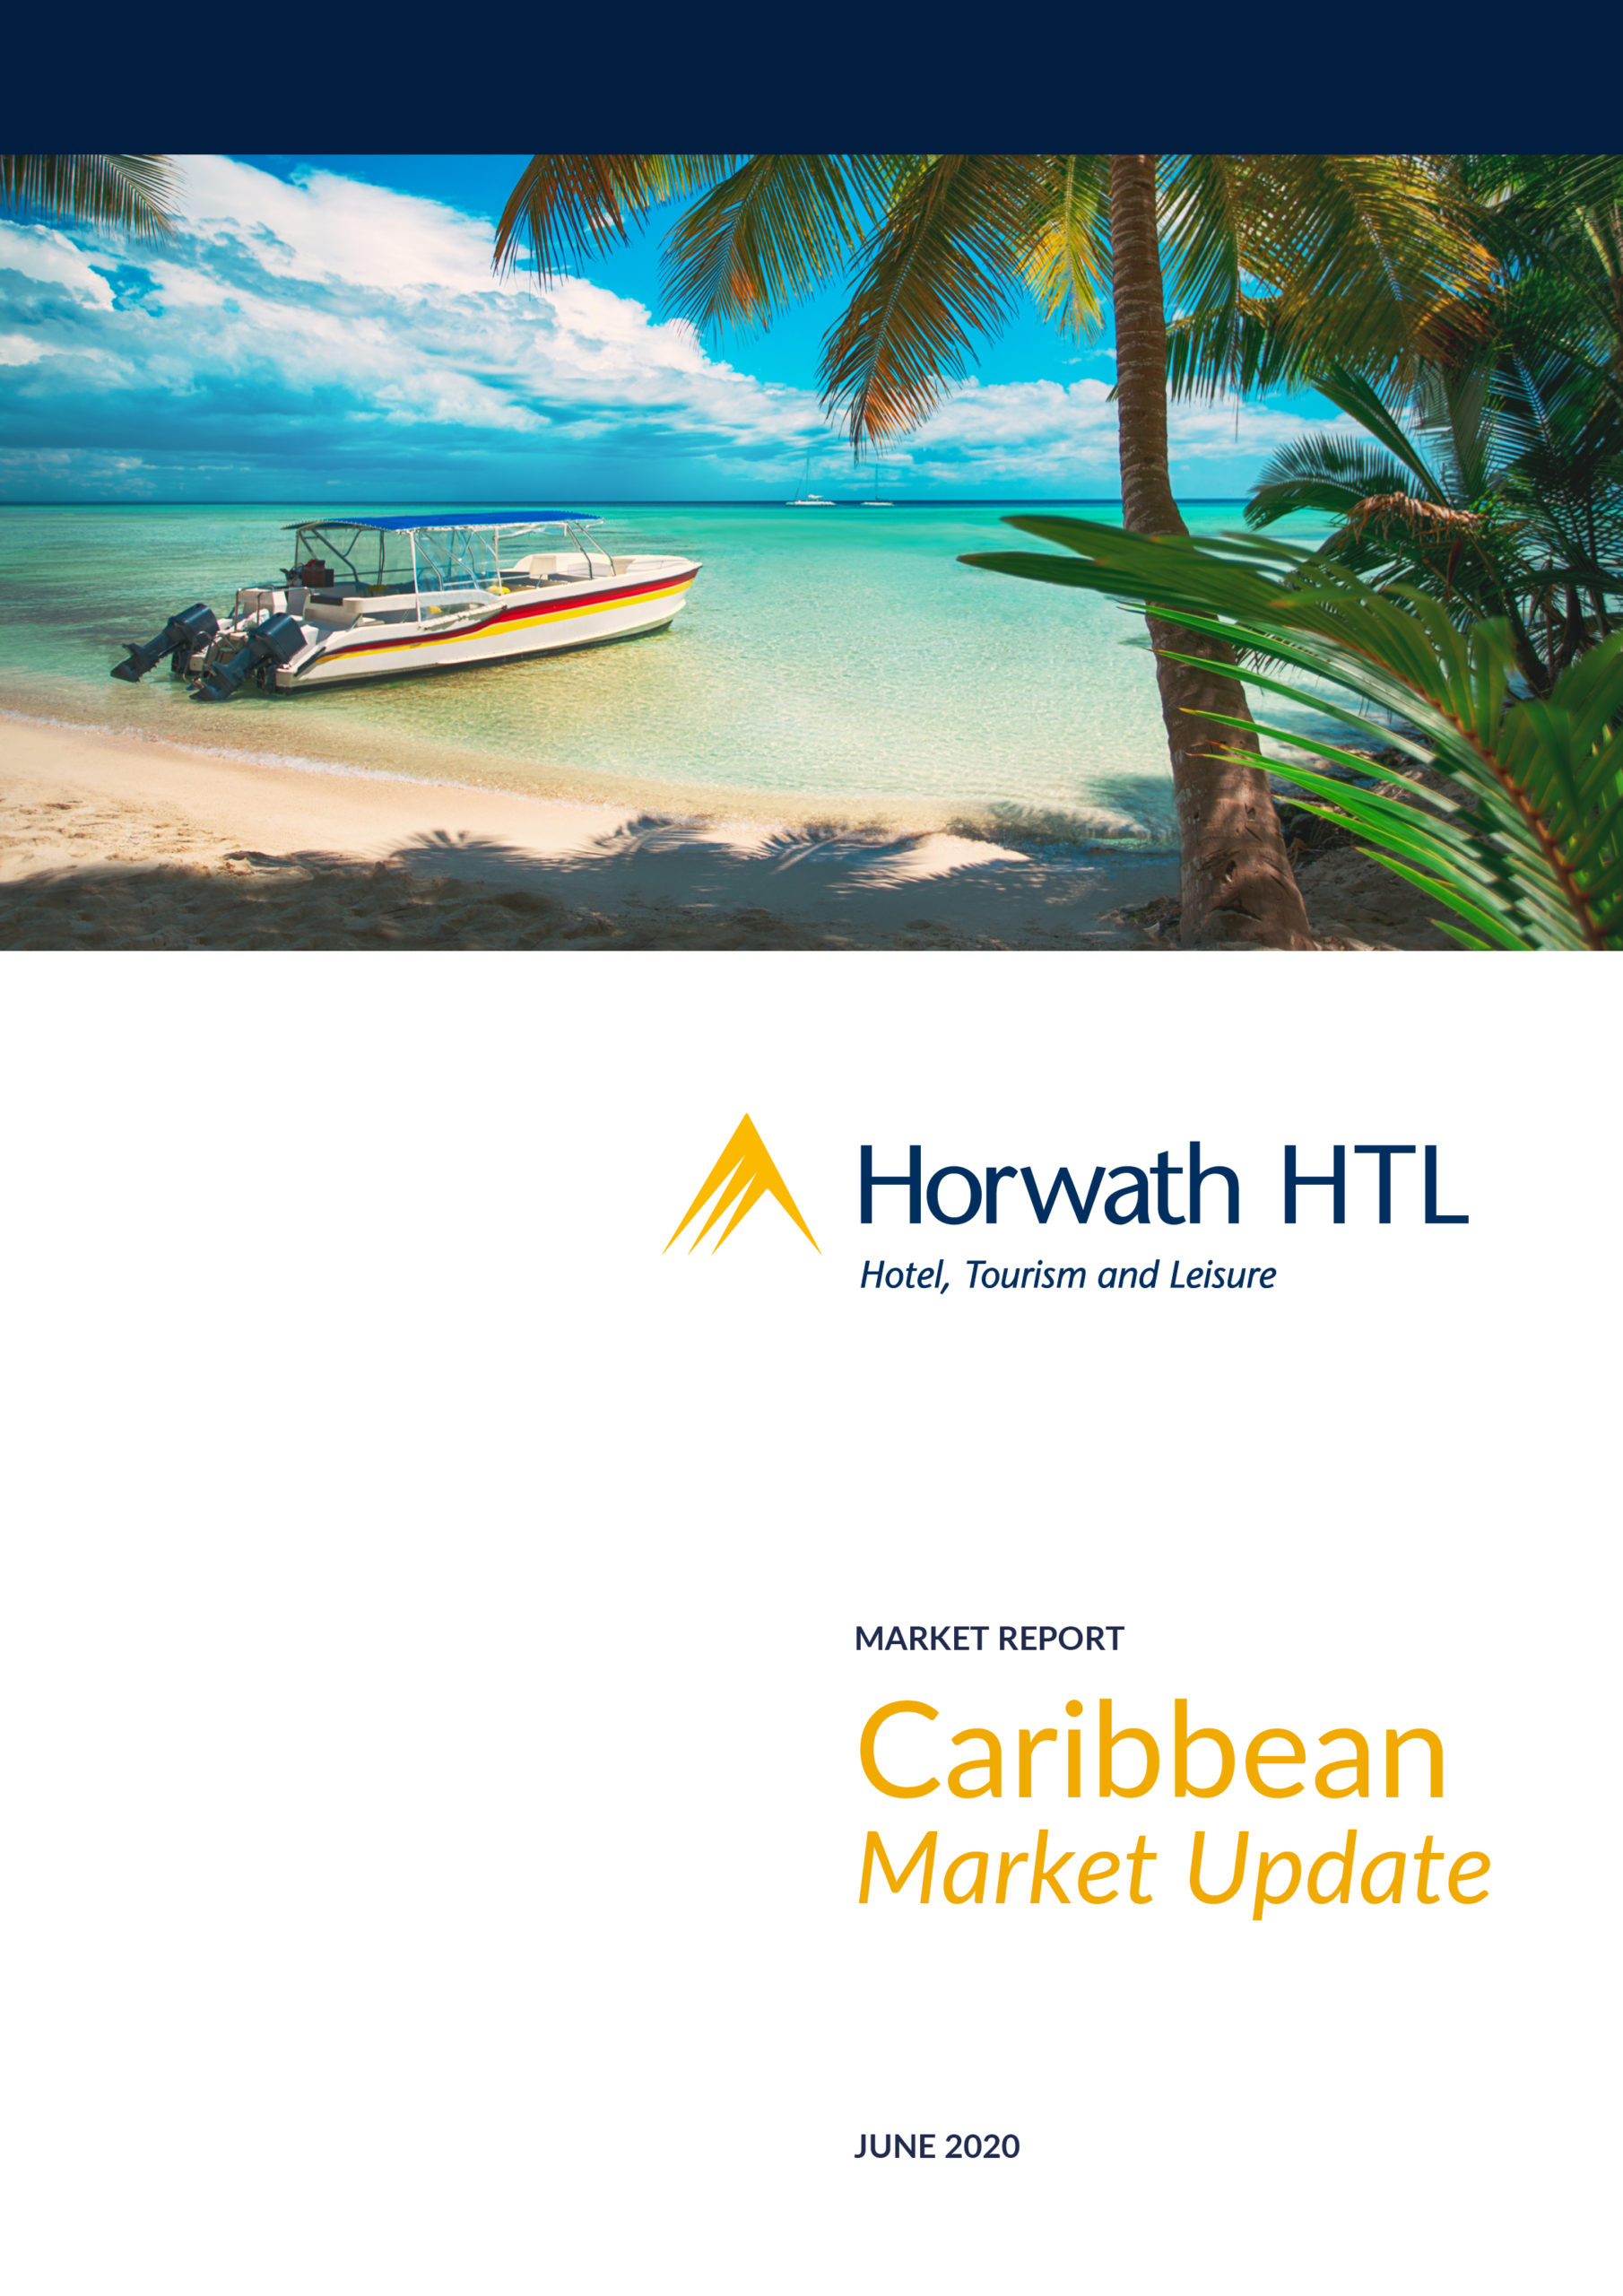 Market Report: The Caribbean